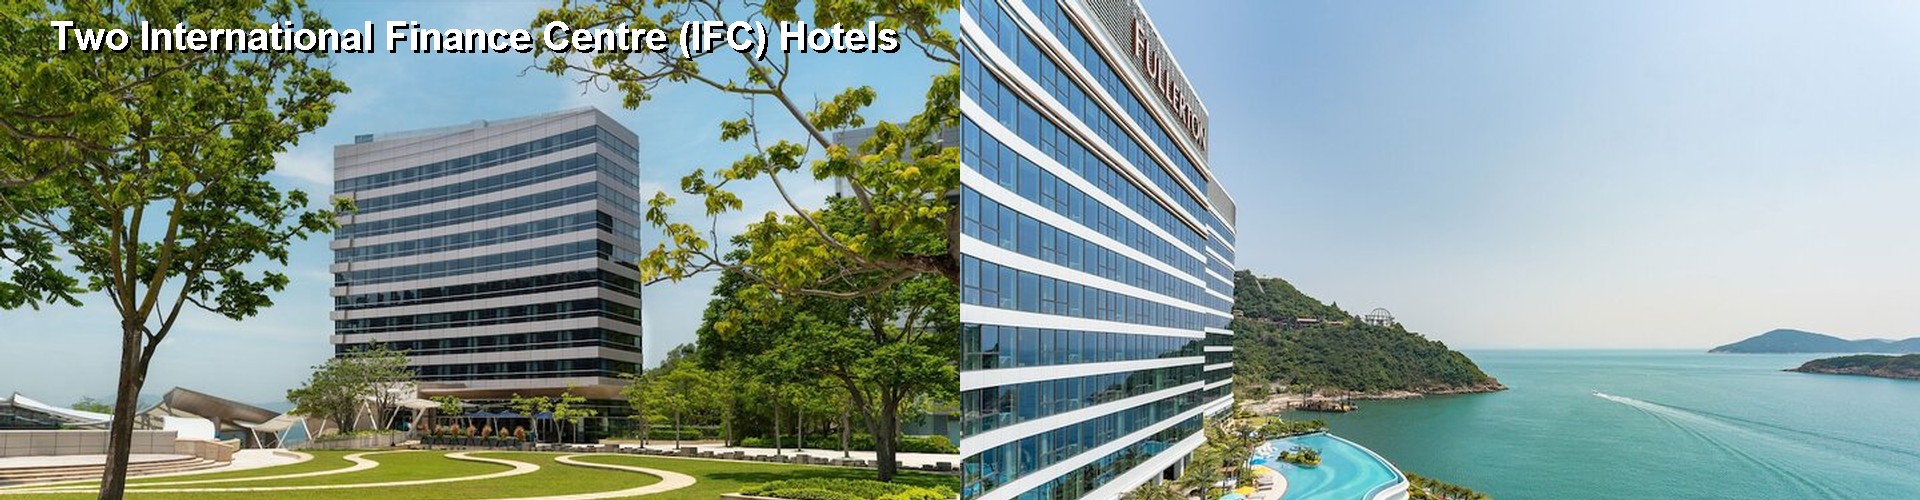 5 Best Hotels near Two International Finance Centre (IFC)